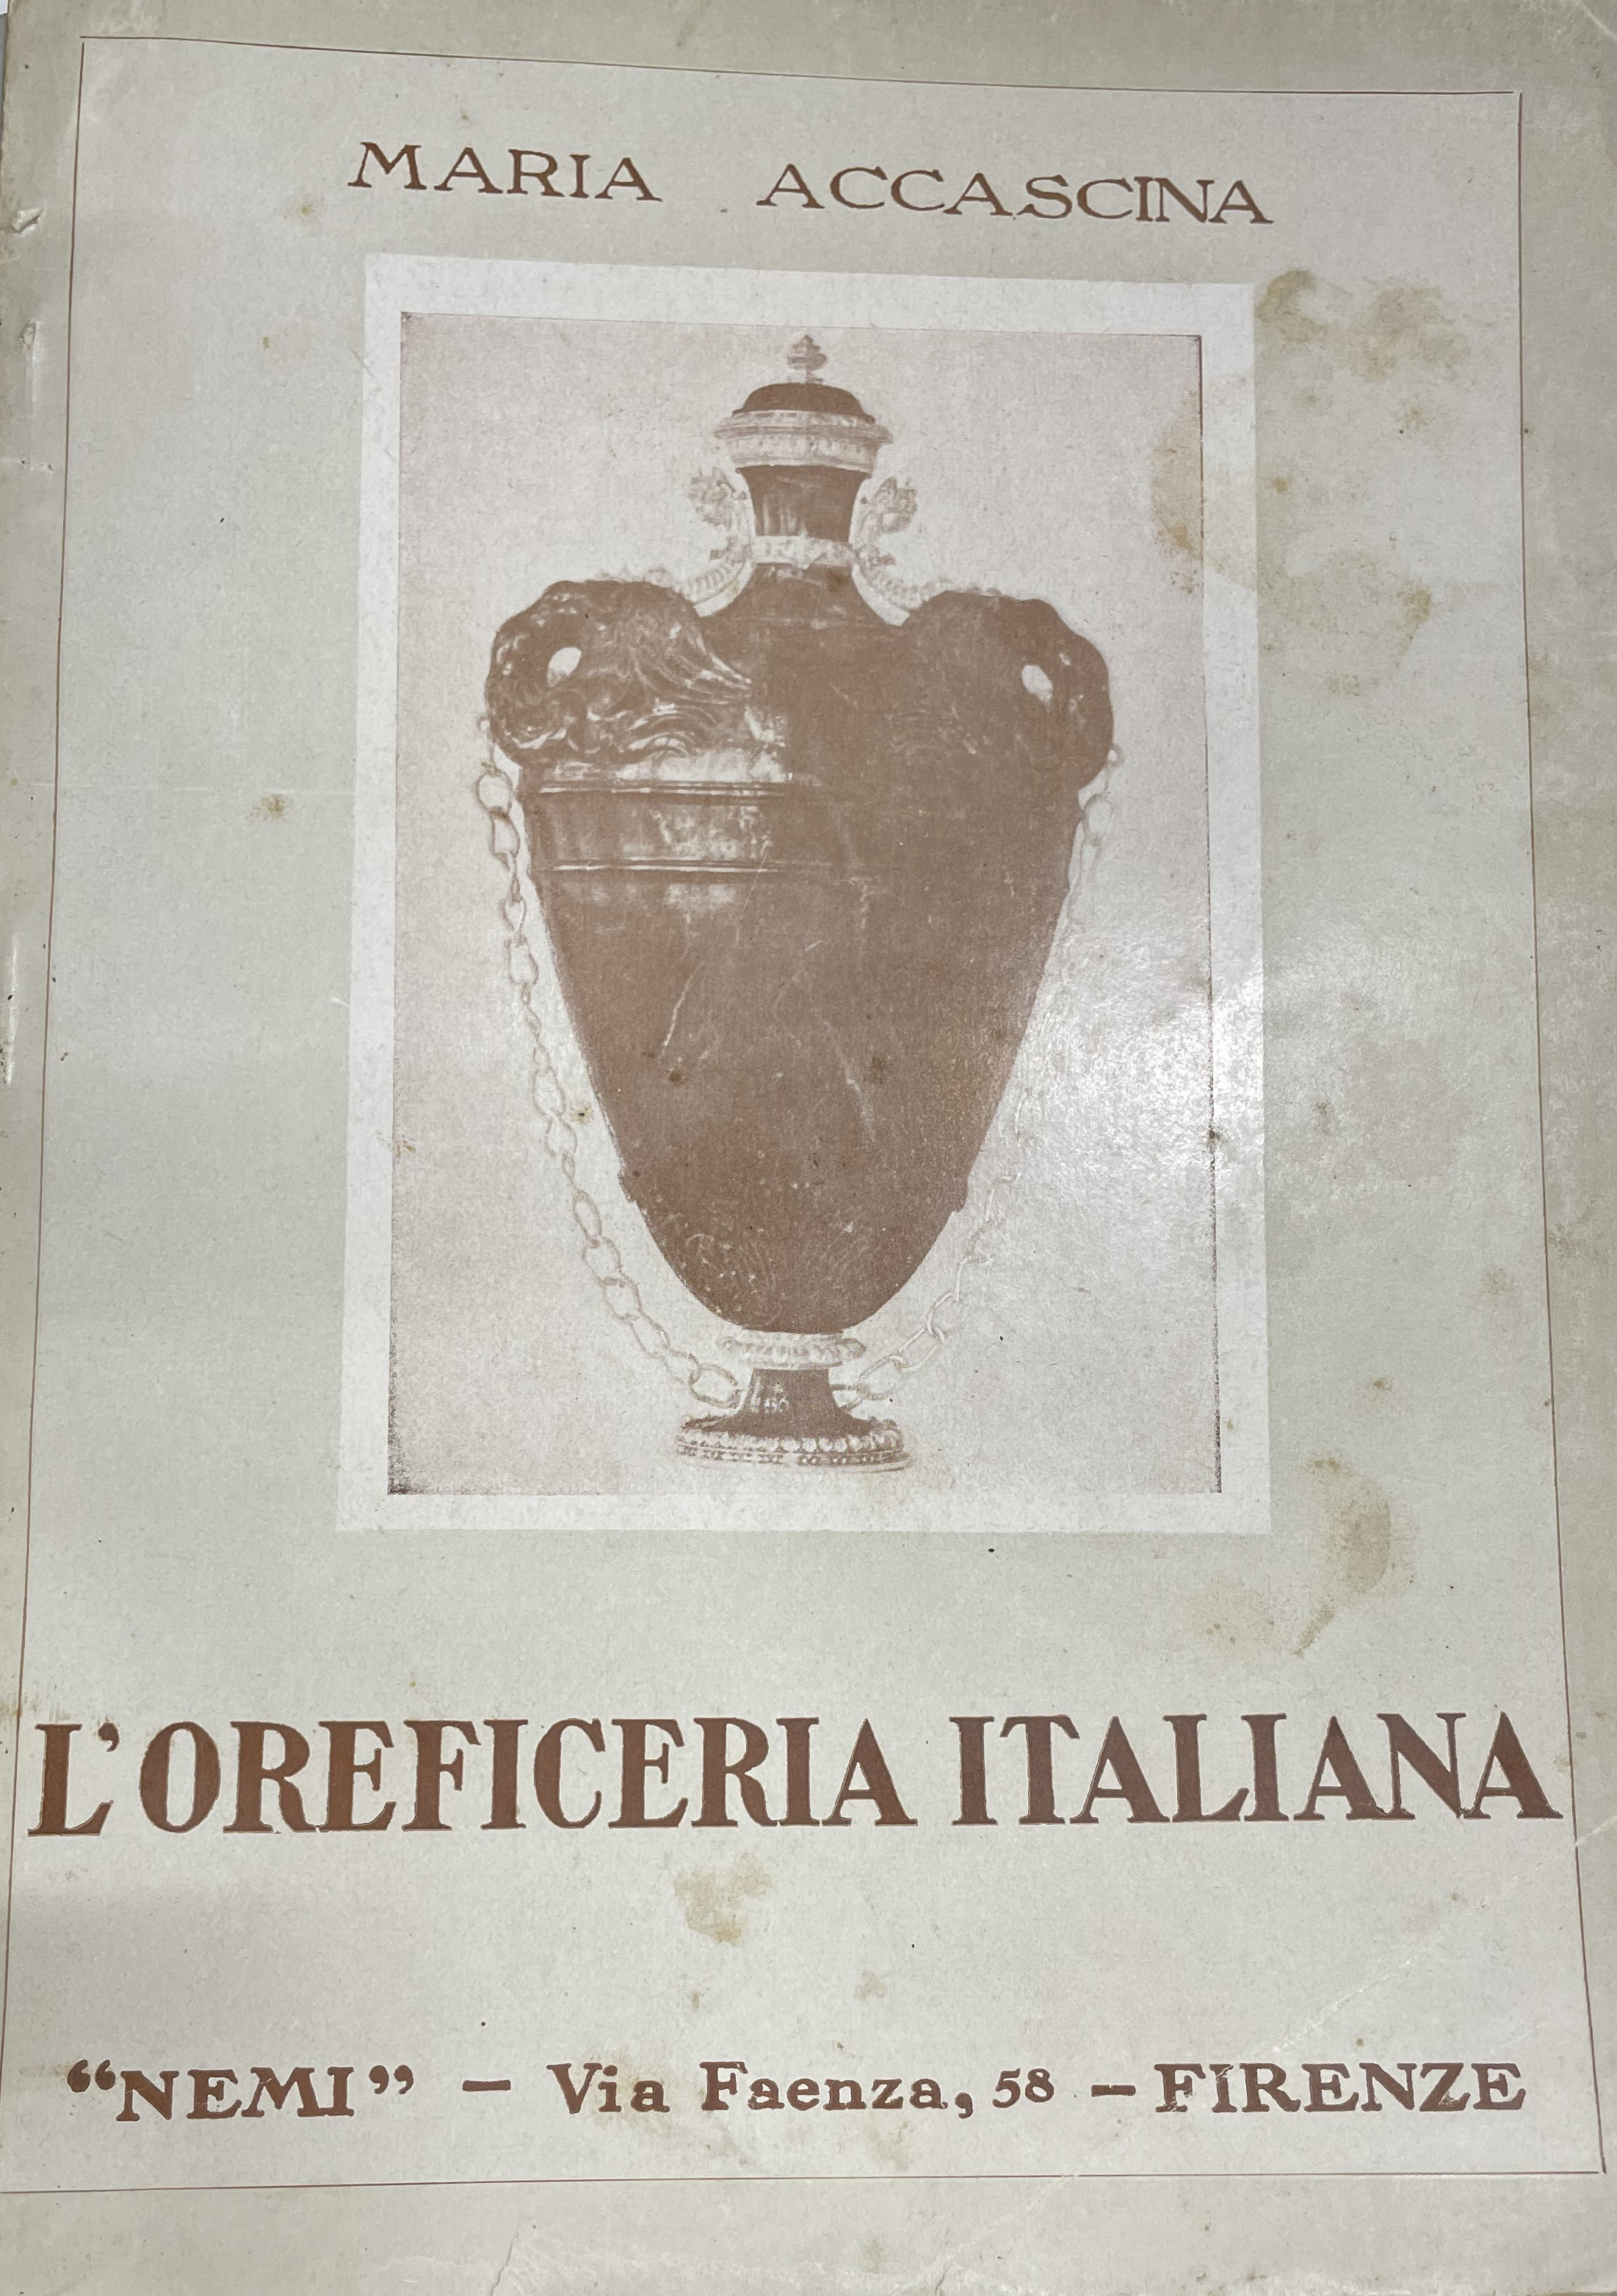 L'oreficeria italiana - [NEMI] - Picture 1 of 1